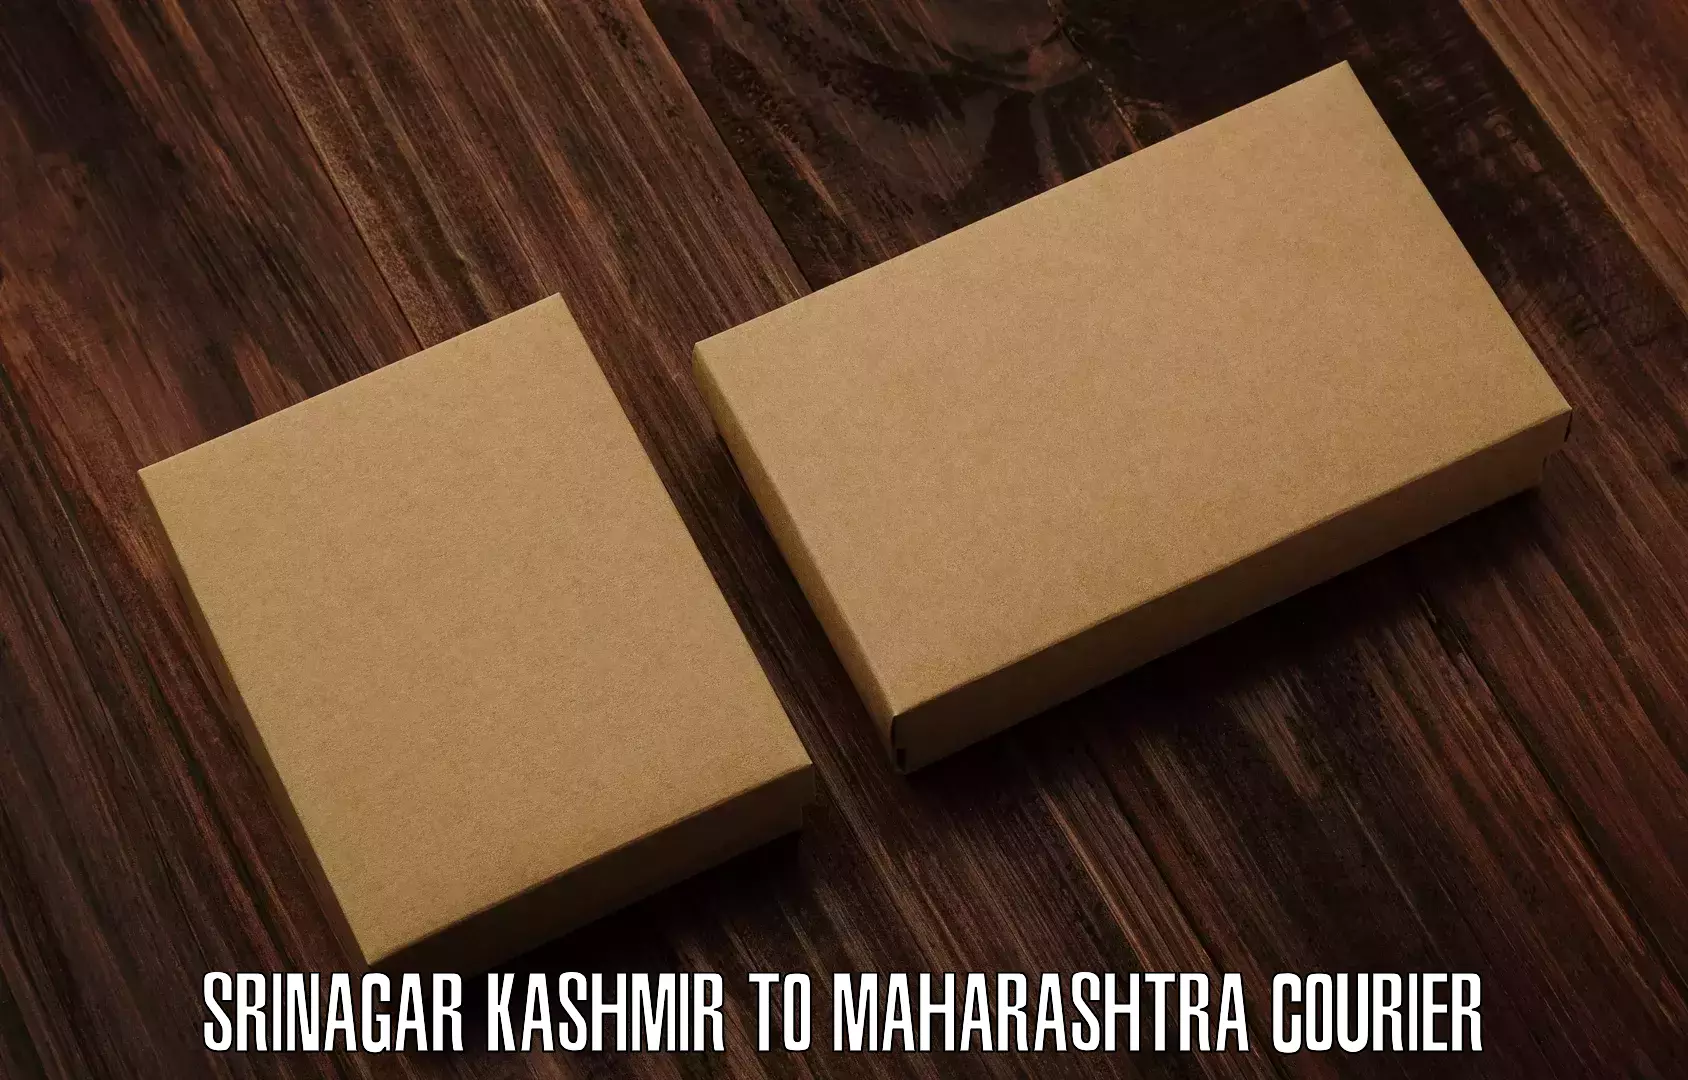 Courier service comparison Srinagar Kashmir to Roha